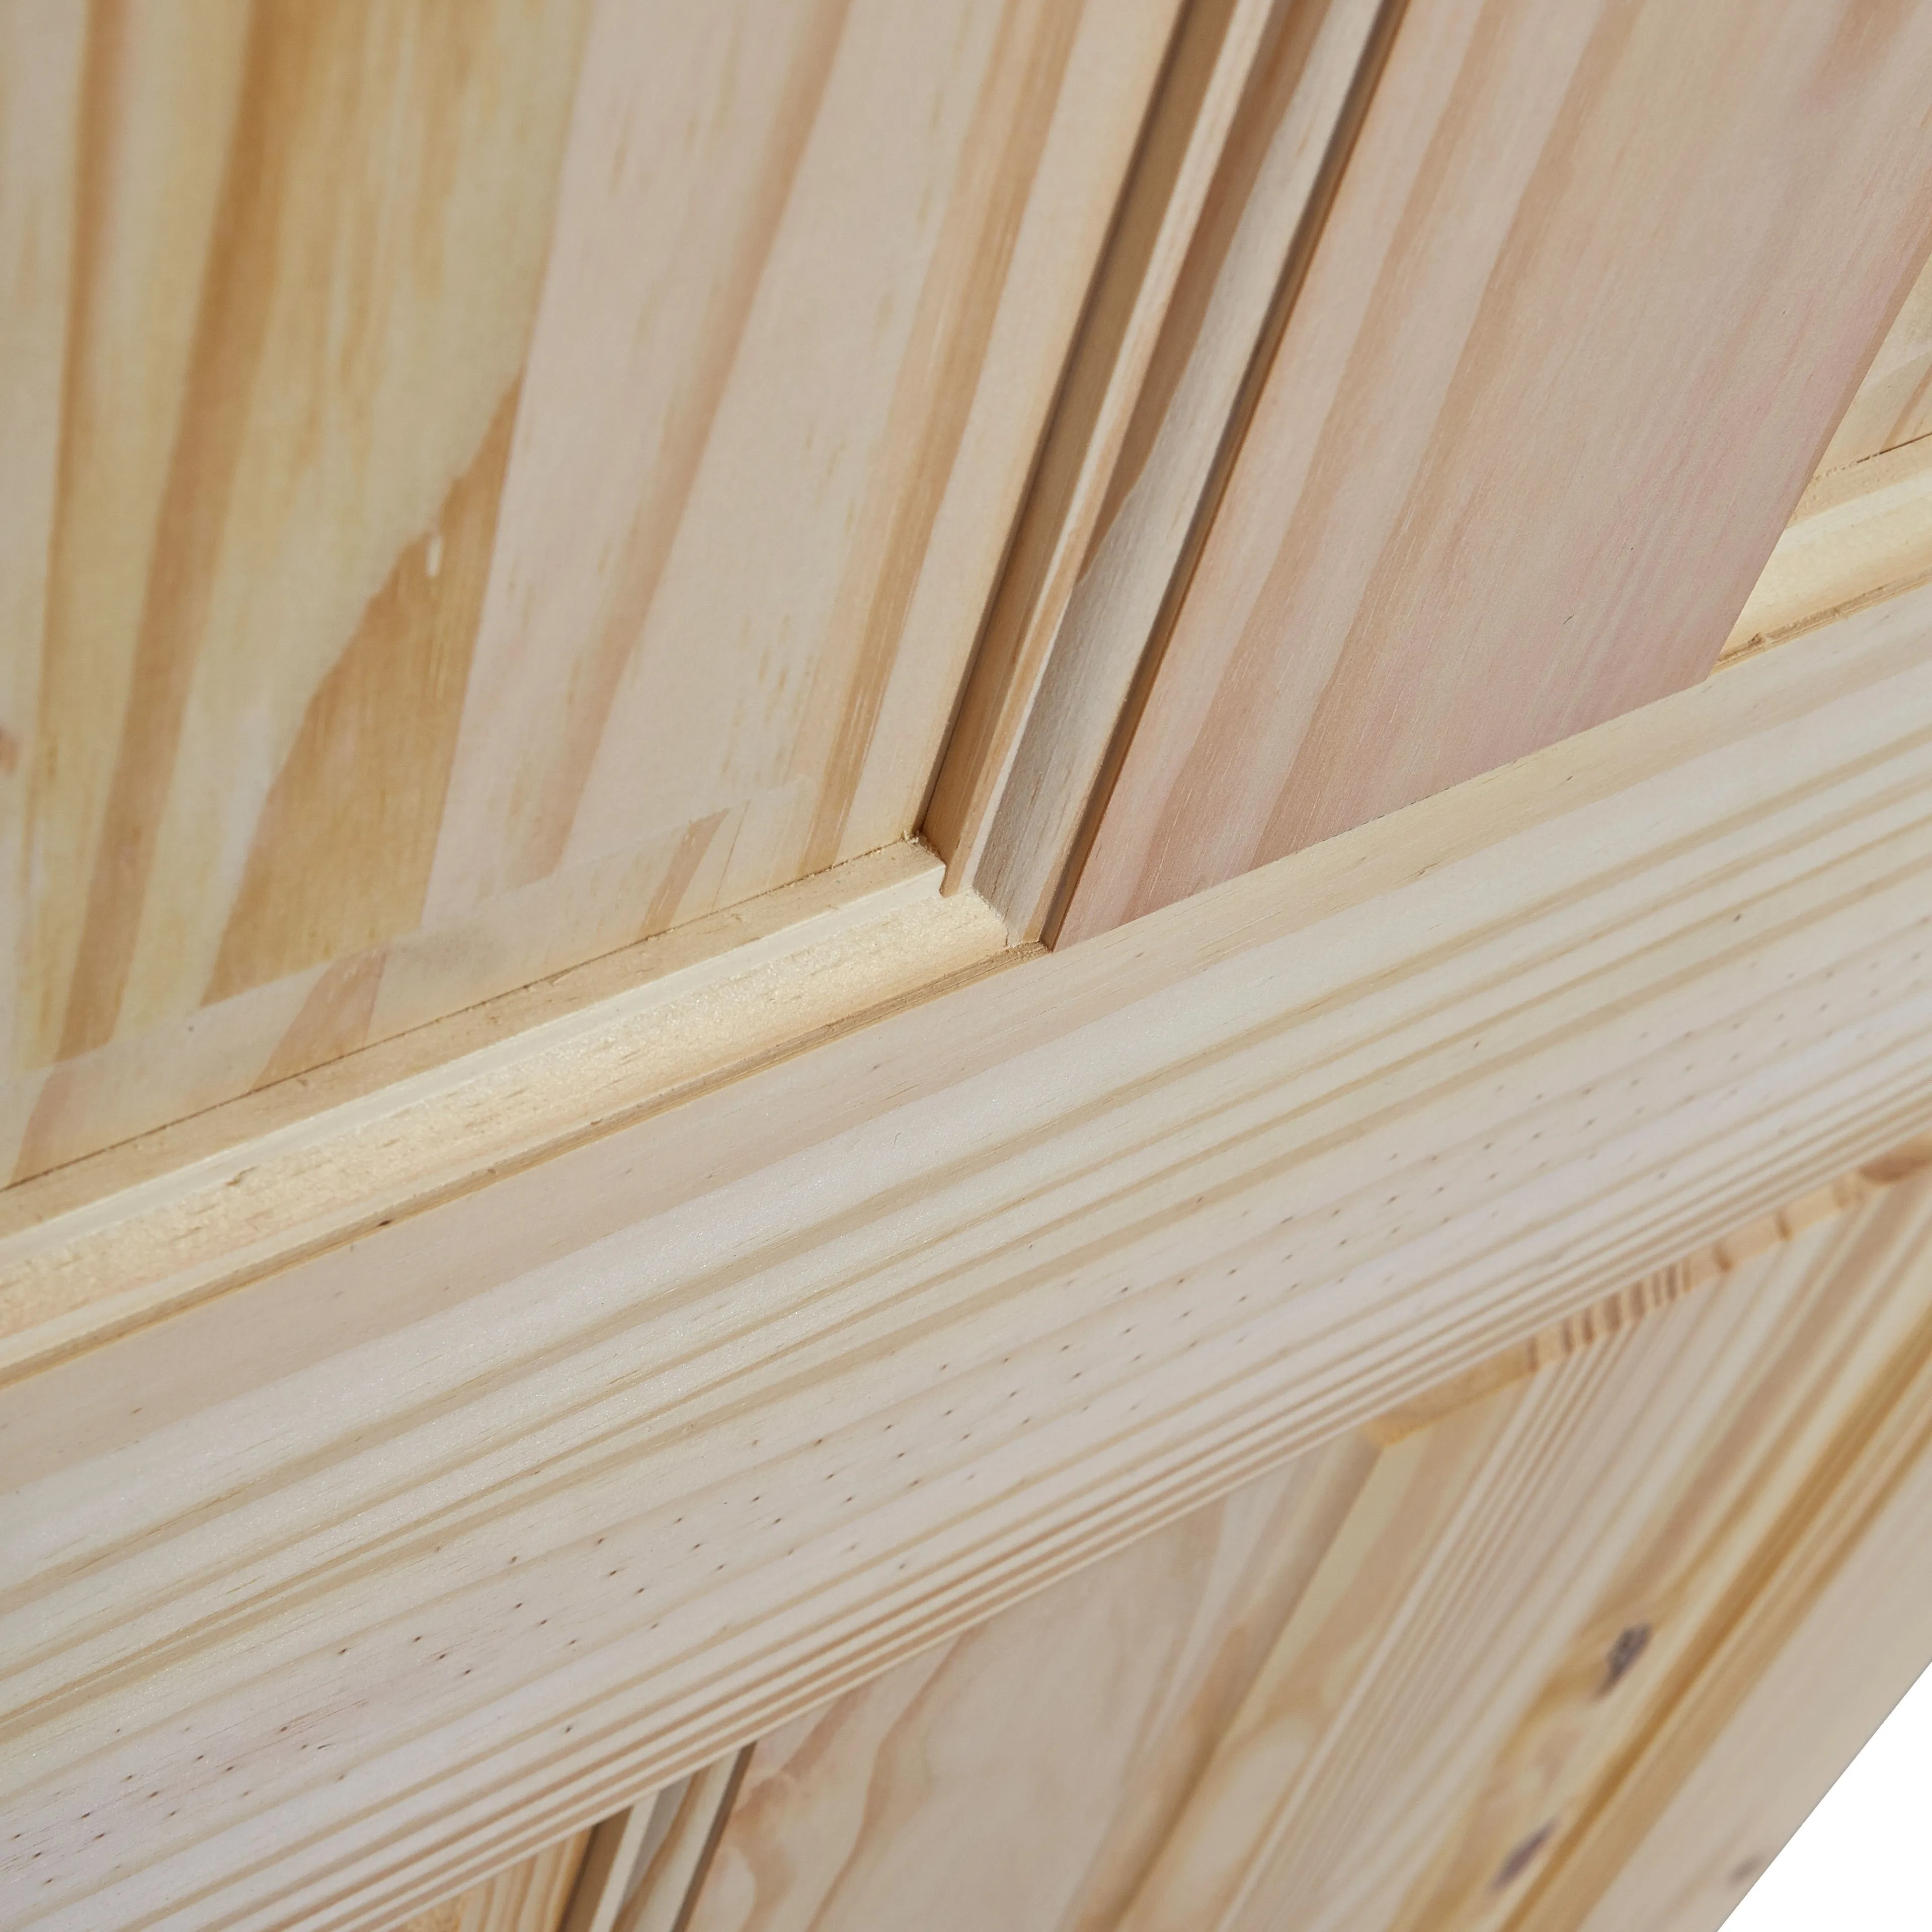 4 panel Knotty pine LH & RH Internal Door, (H)2032mm (W)813mm